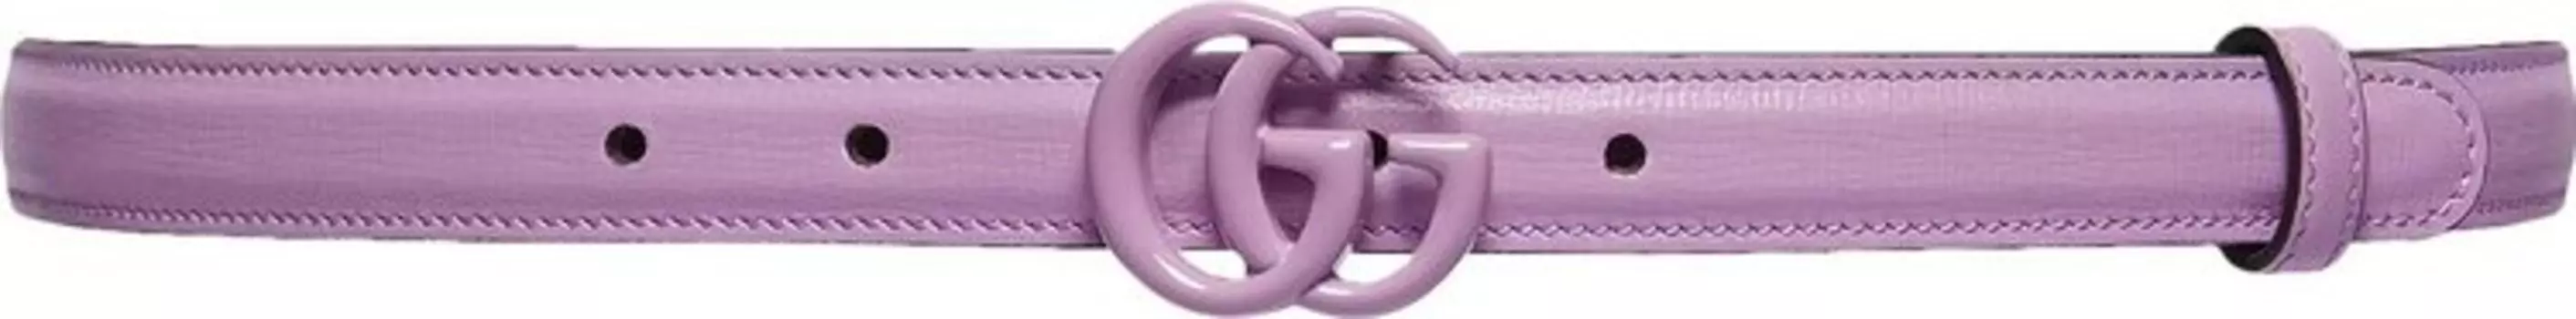 Ремень Gucci GG Marmont Thin Belt Light Purple, фиолетовый